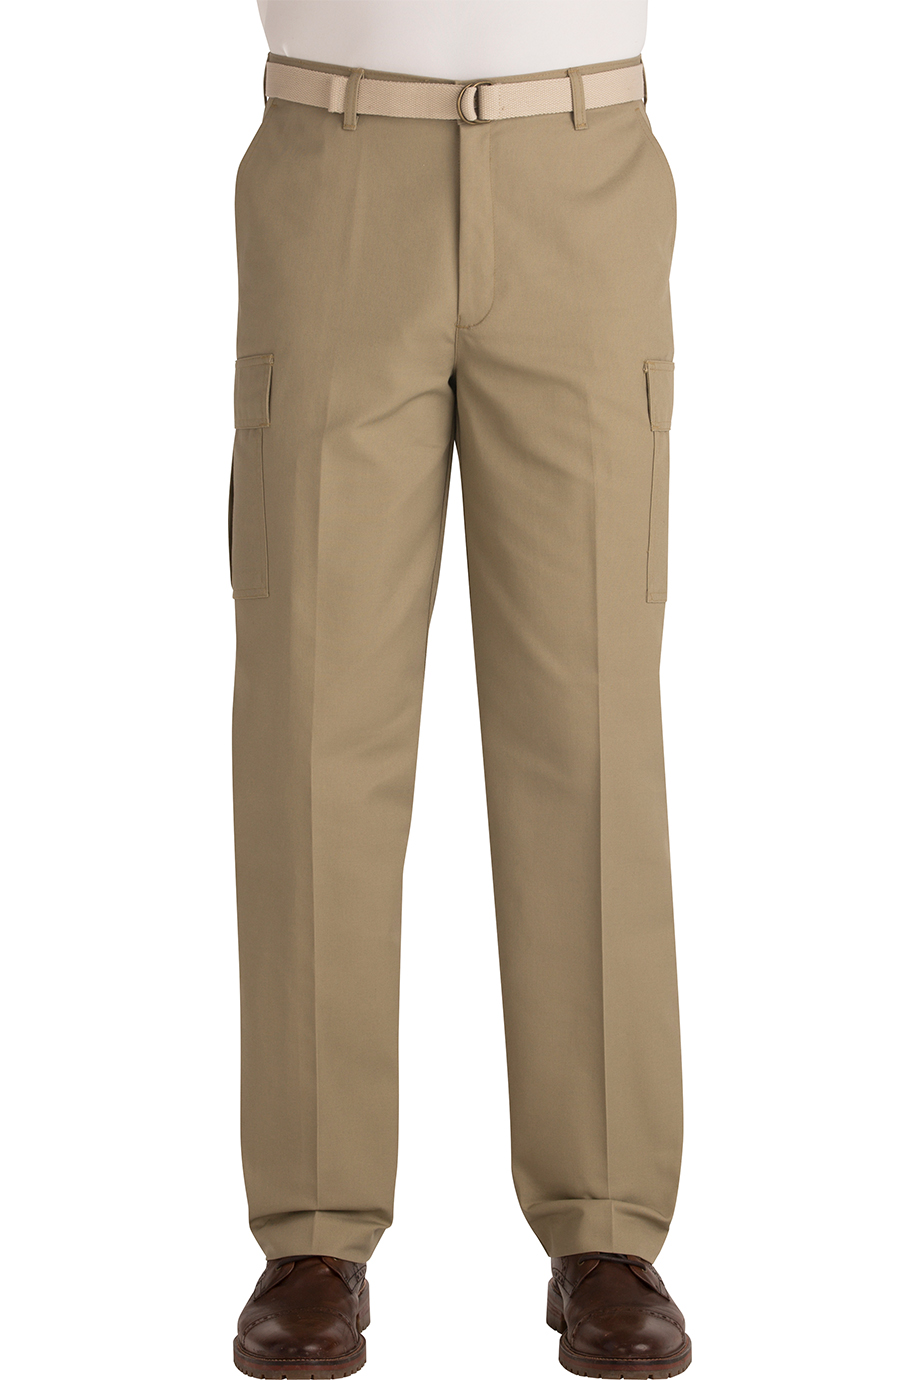 Ed Garments MenS 2568 Two Cargo Pockets Utility Pants Tan 32-28 